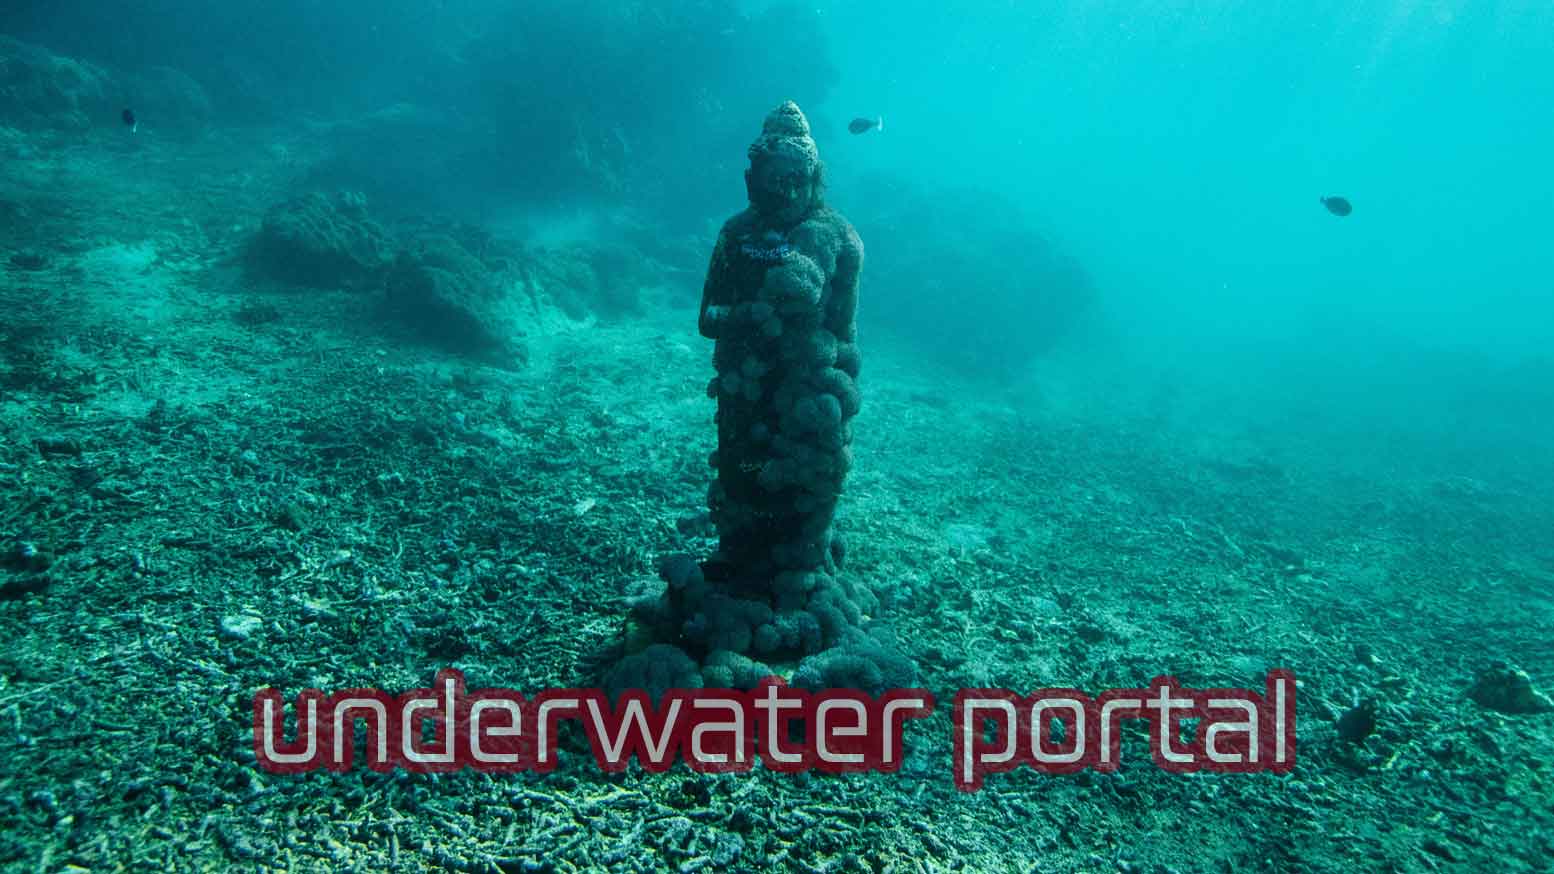 Permalink to: underwater portal